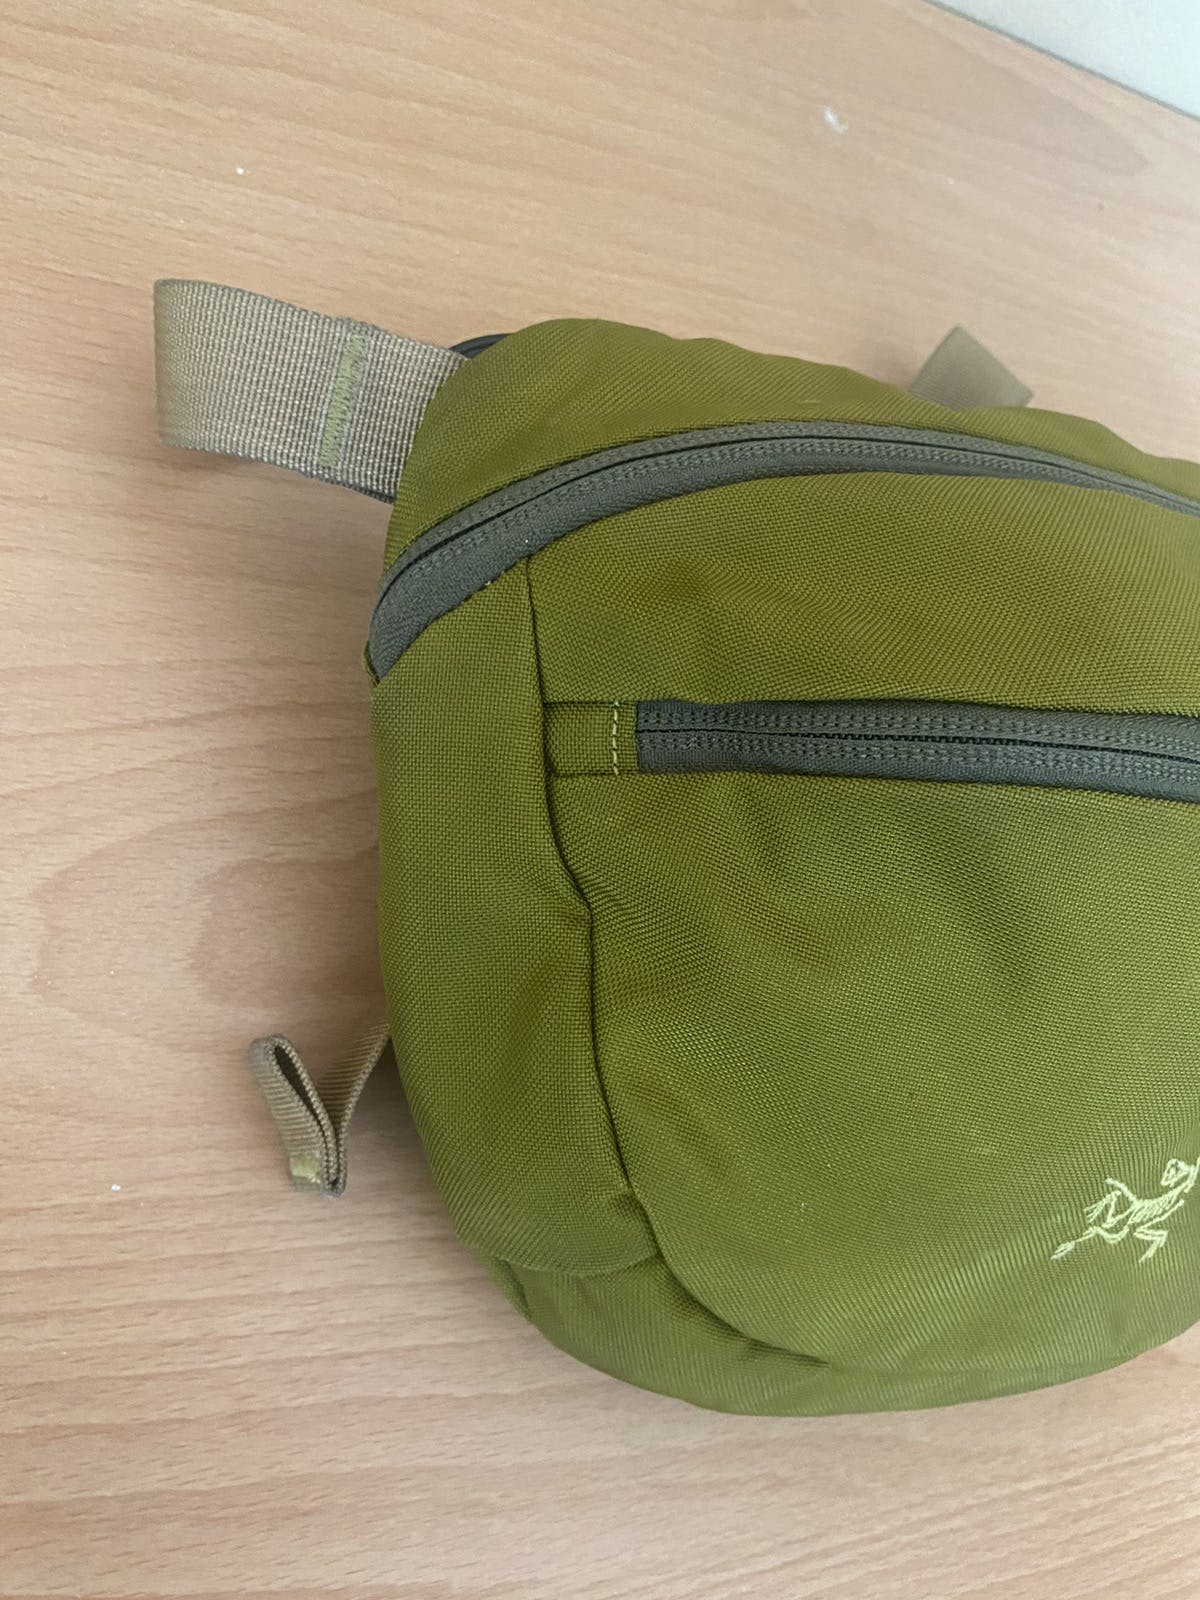 Authentic Arc’teryx Green Army Crossbody Sling Bag - 3